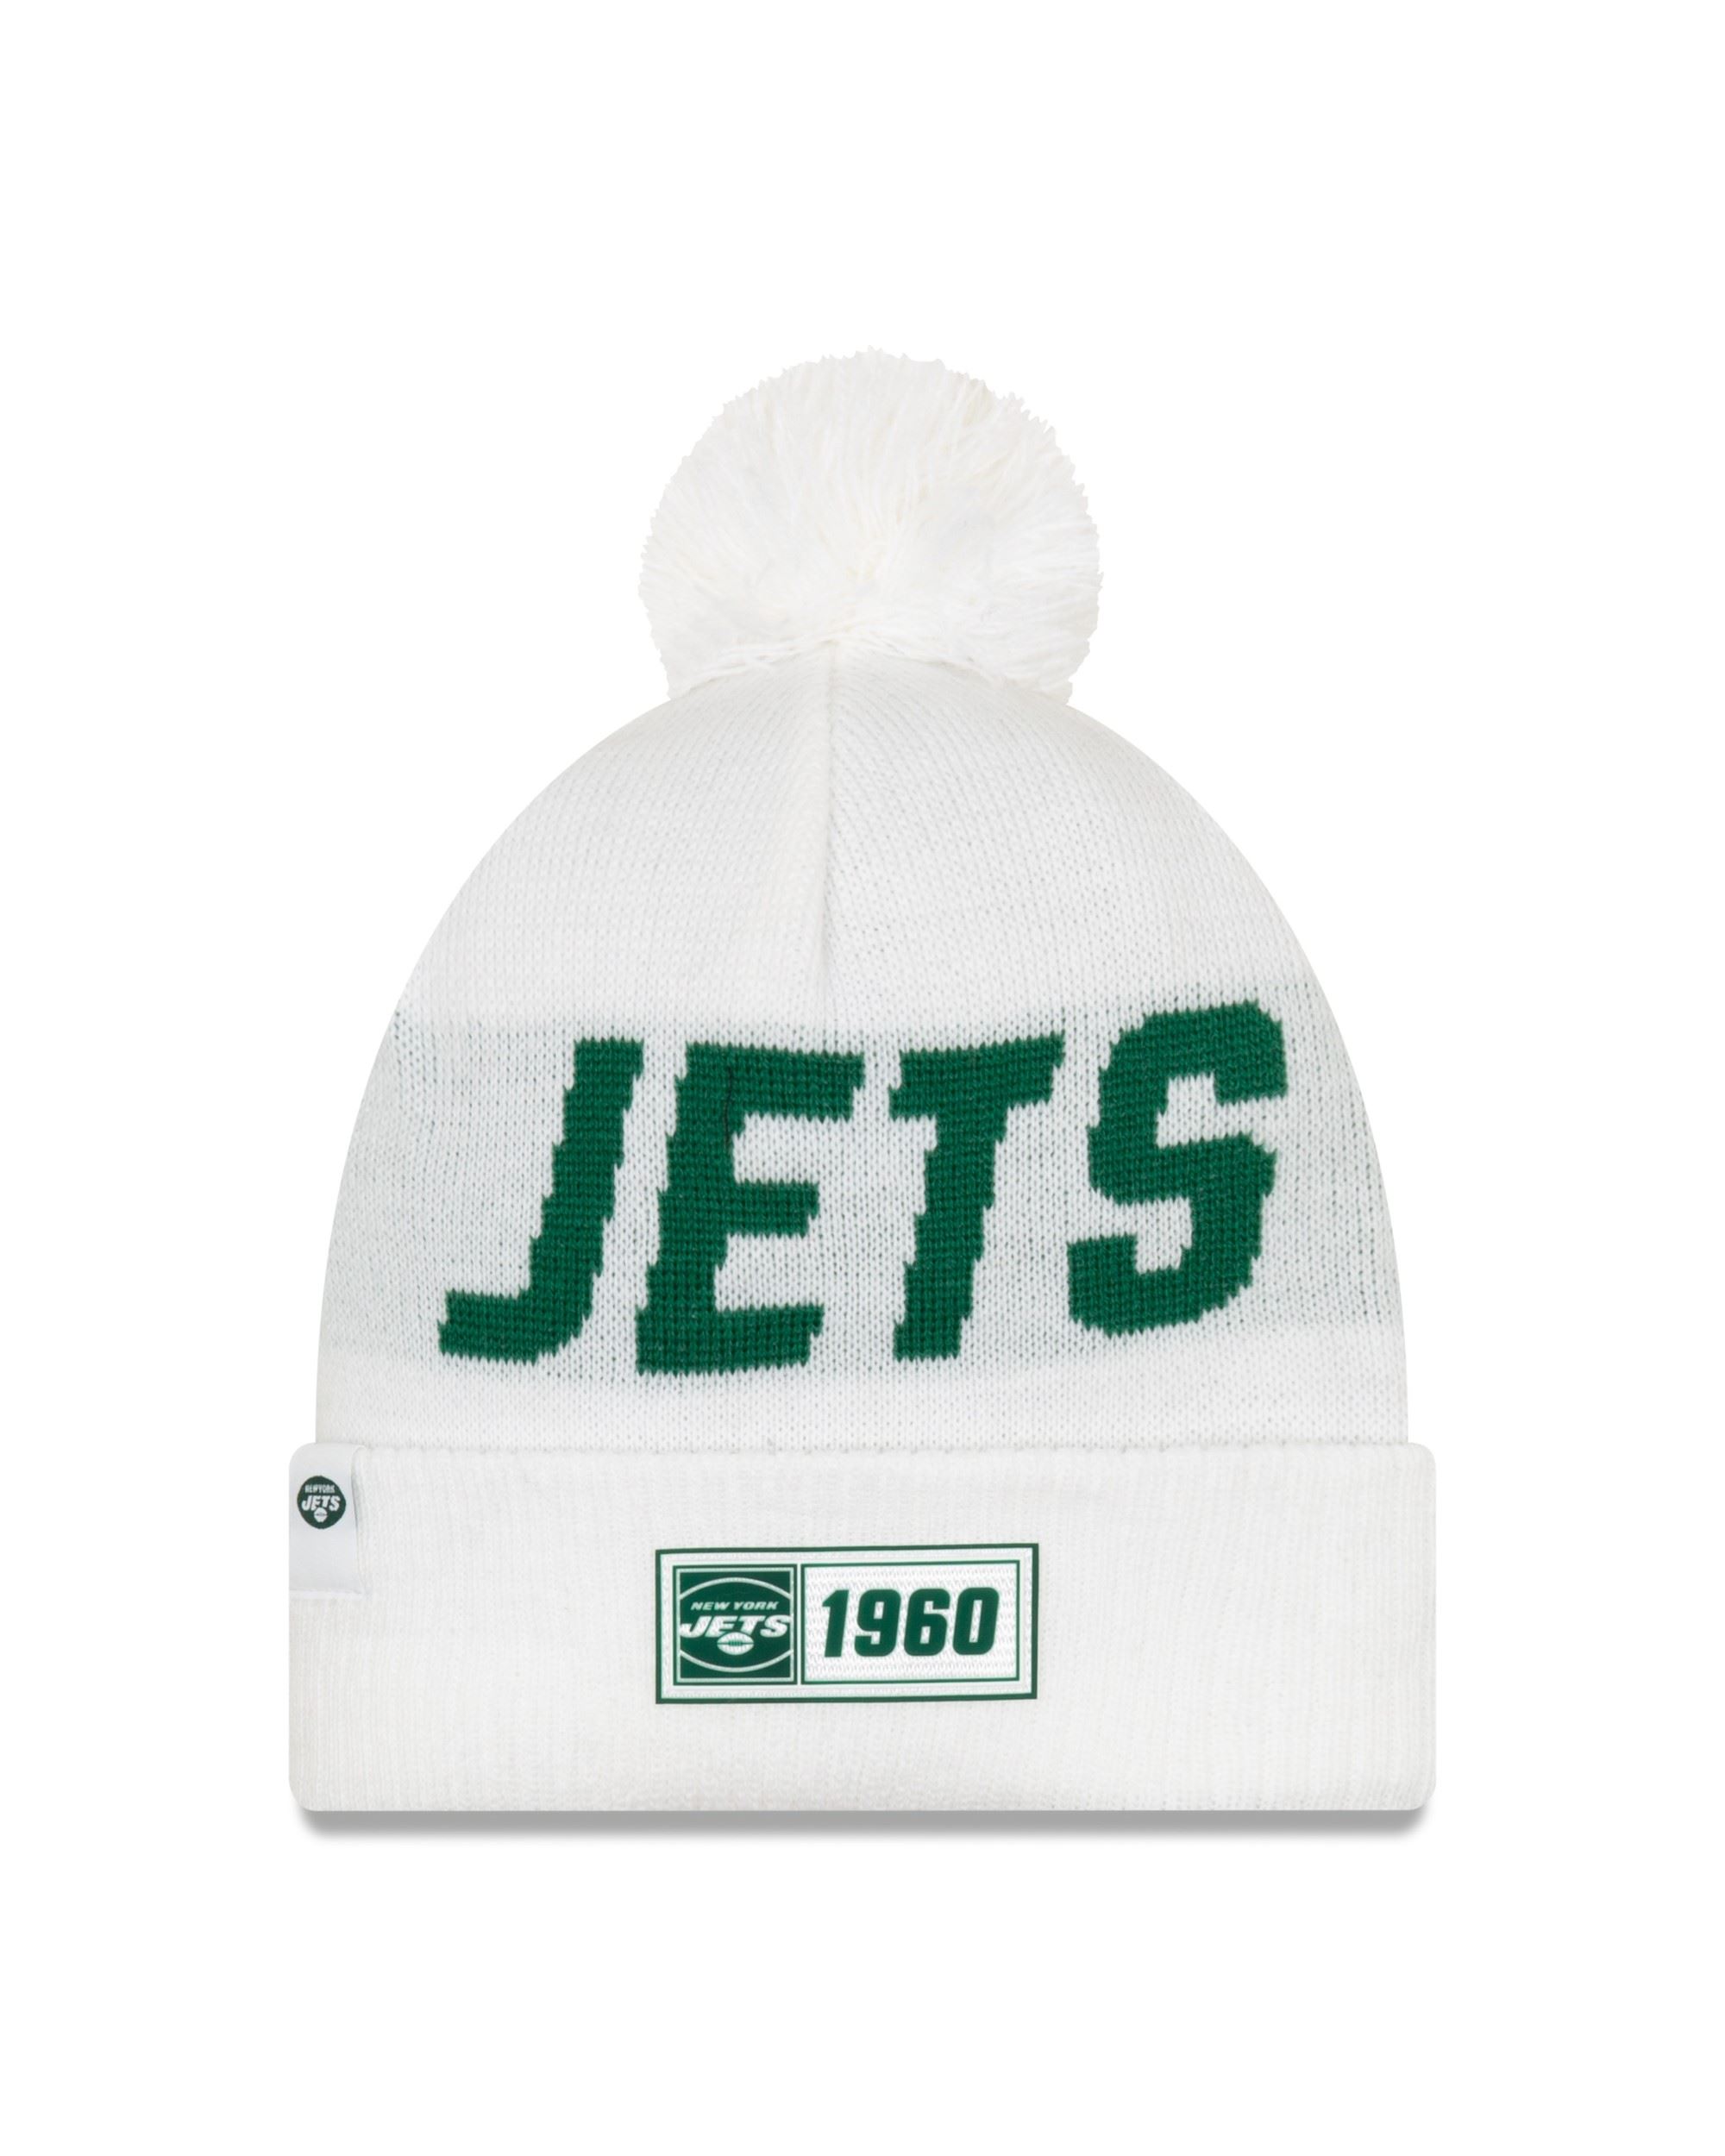 New York Jets  NFL 2019 On Field Road 1960 Beanie New Era